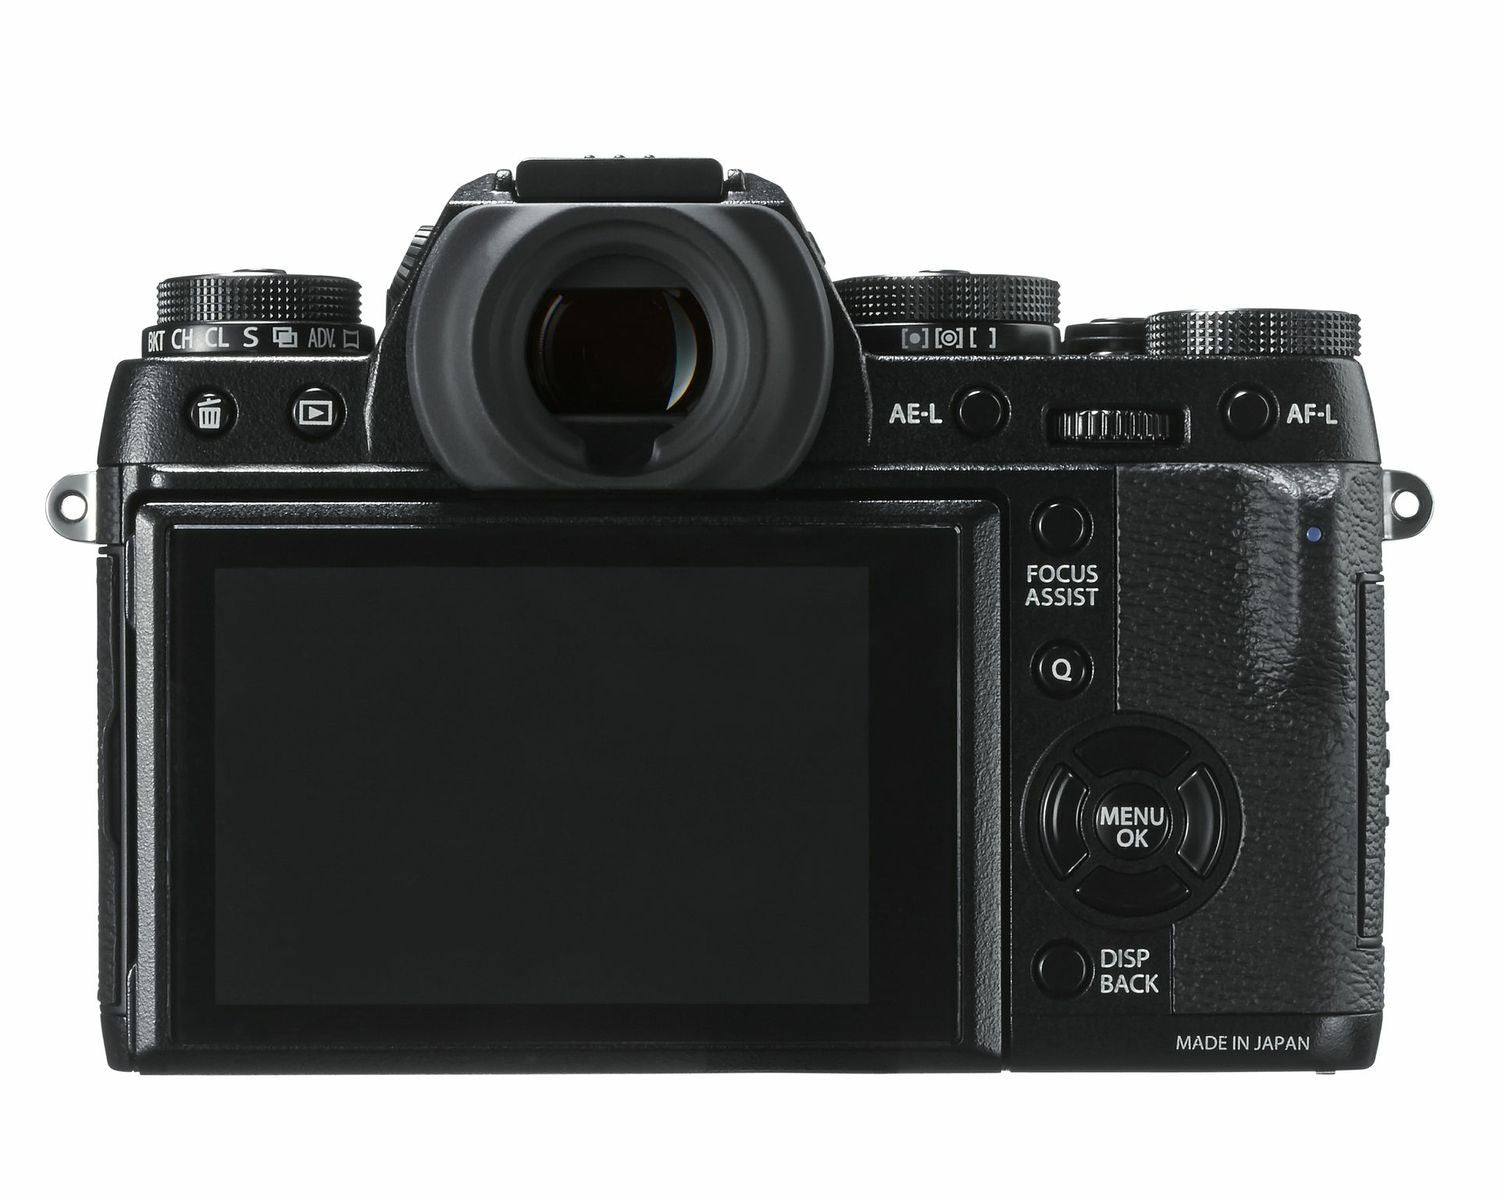 Fujifilm X-T1 Digital Camera Body (Black), camera mirrorless cameras, Fujifilm - Pictureline  - 2